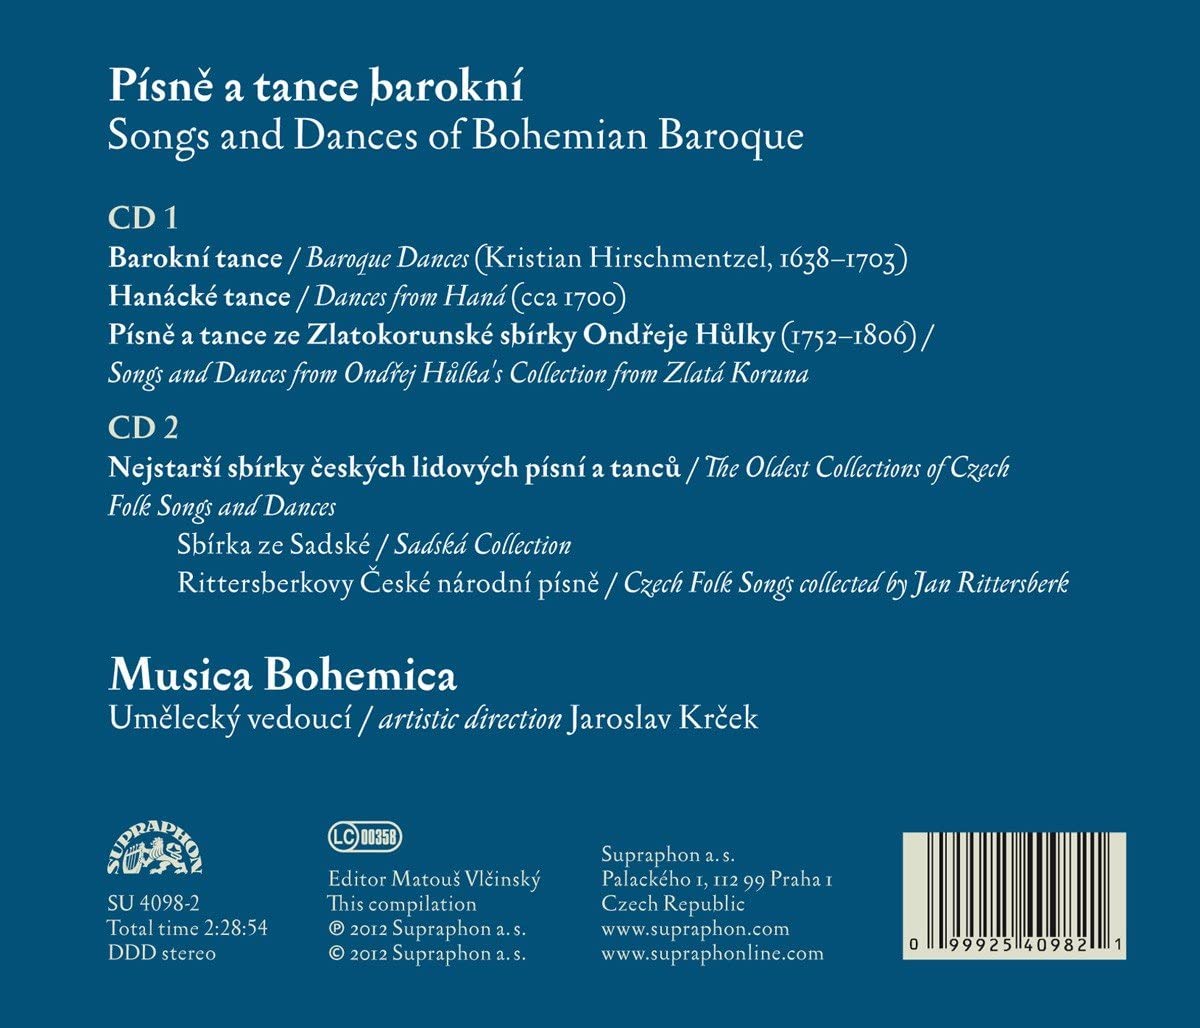 Songs and Dances of Bohemian Baroque - slide-1